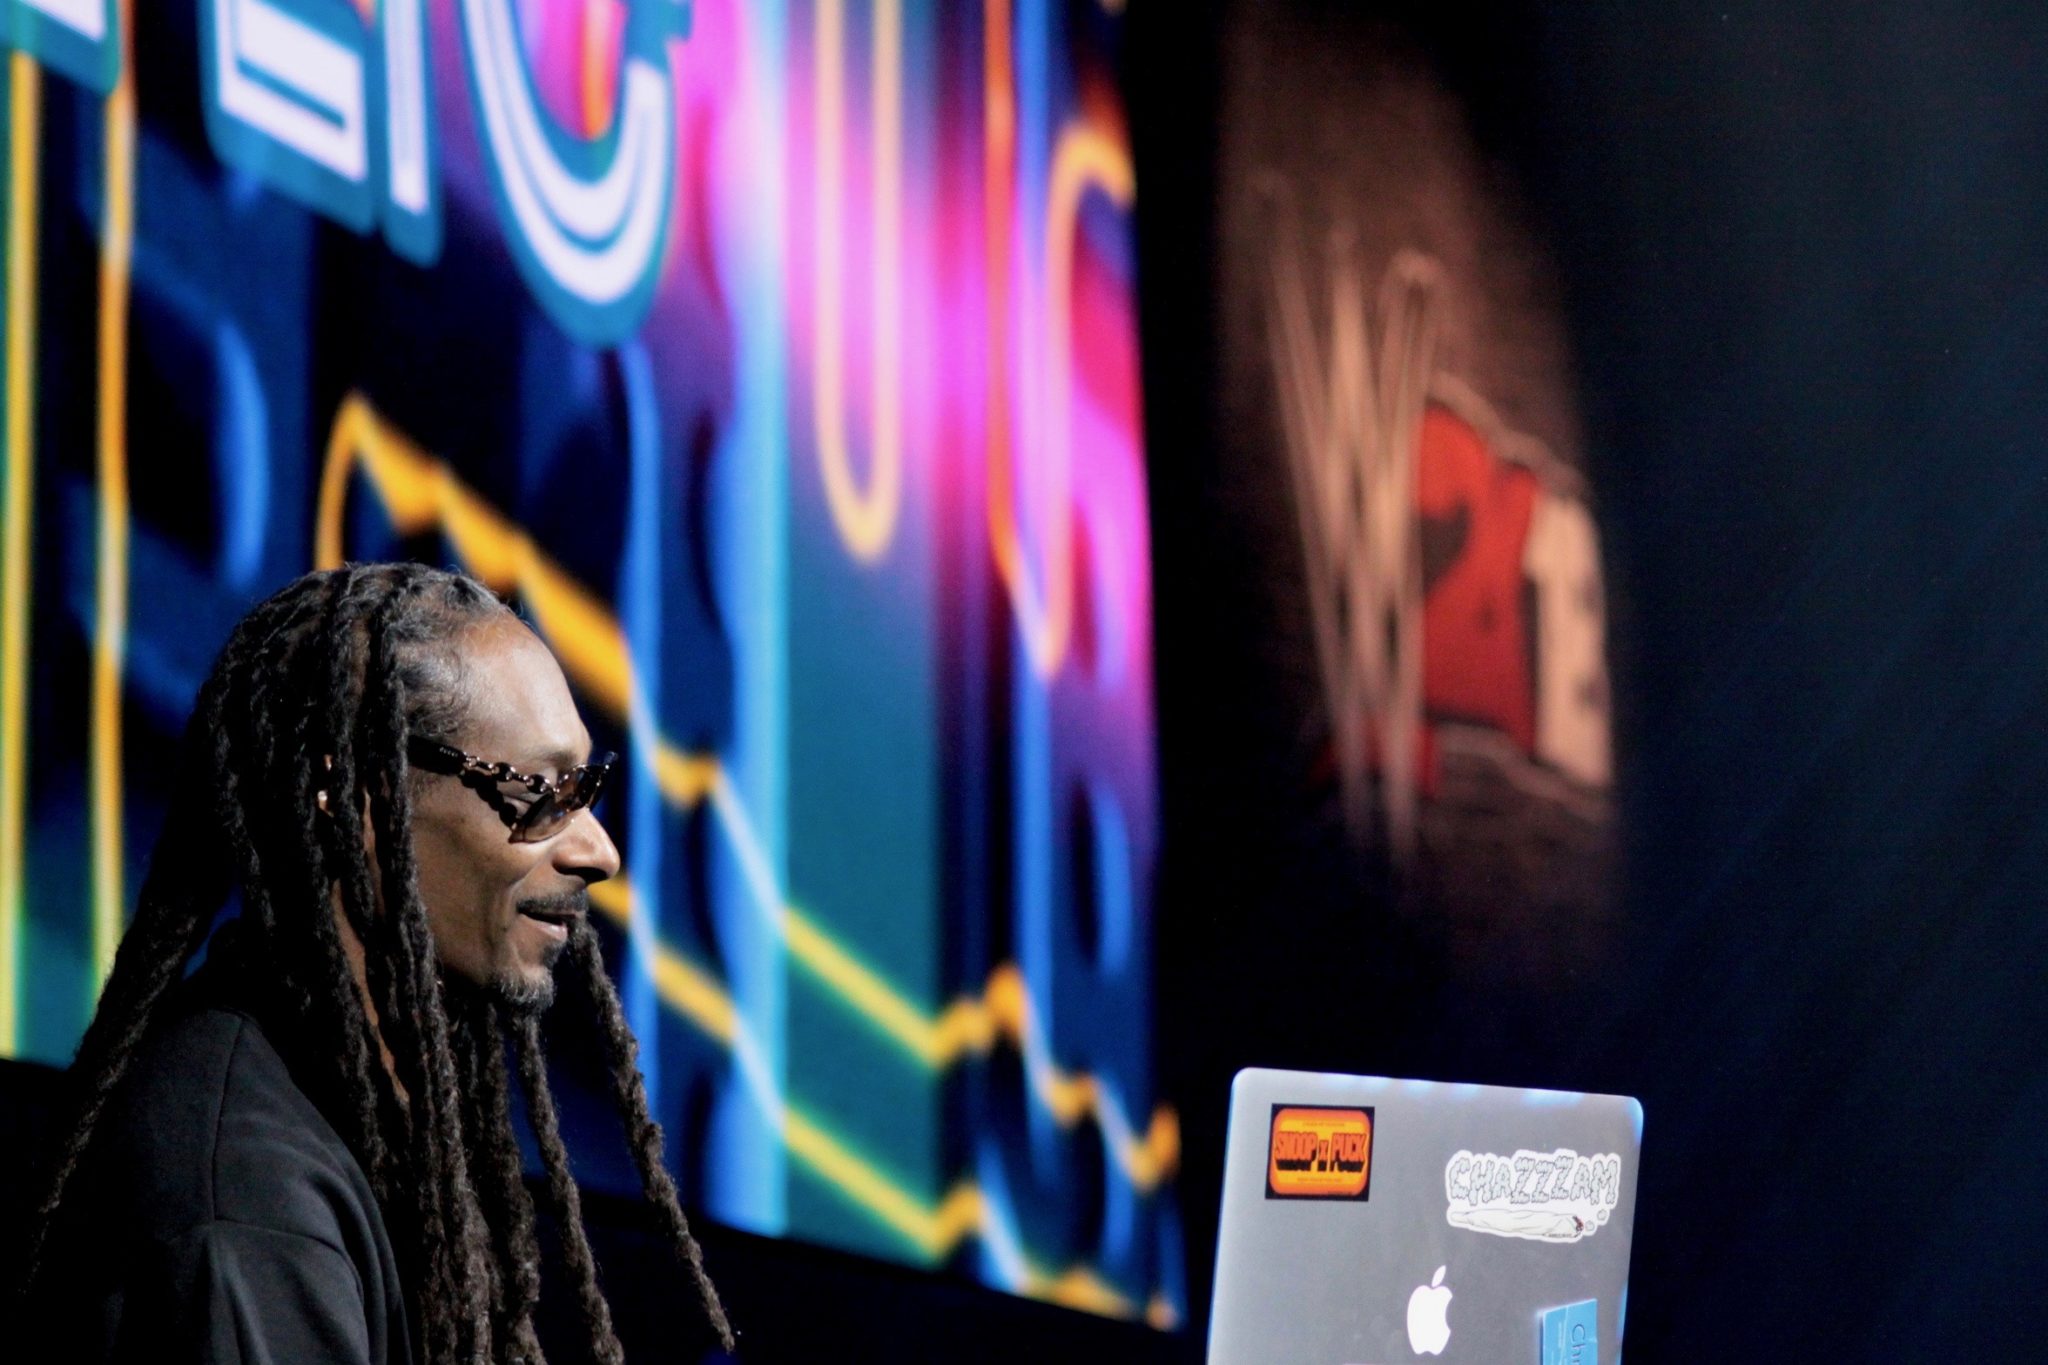 Snoop Dogg live in concert